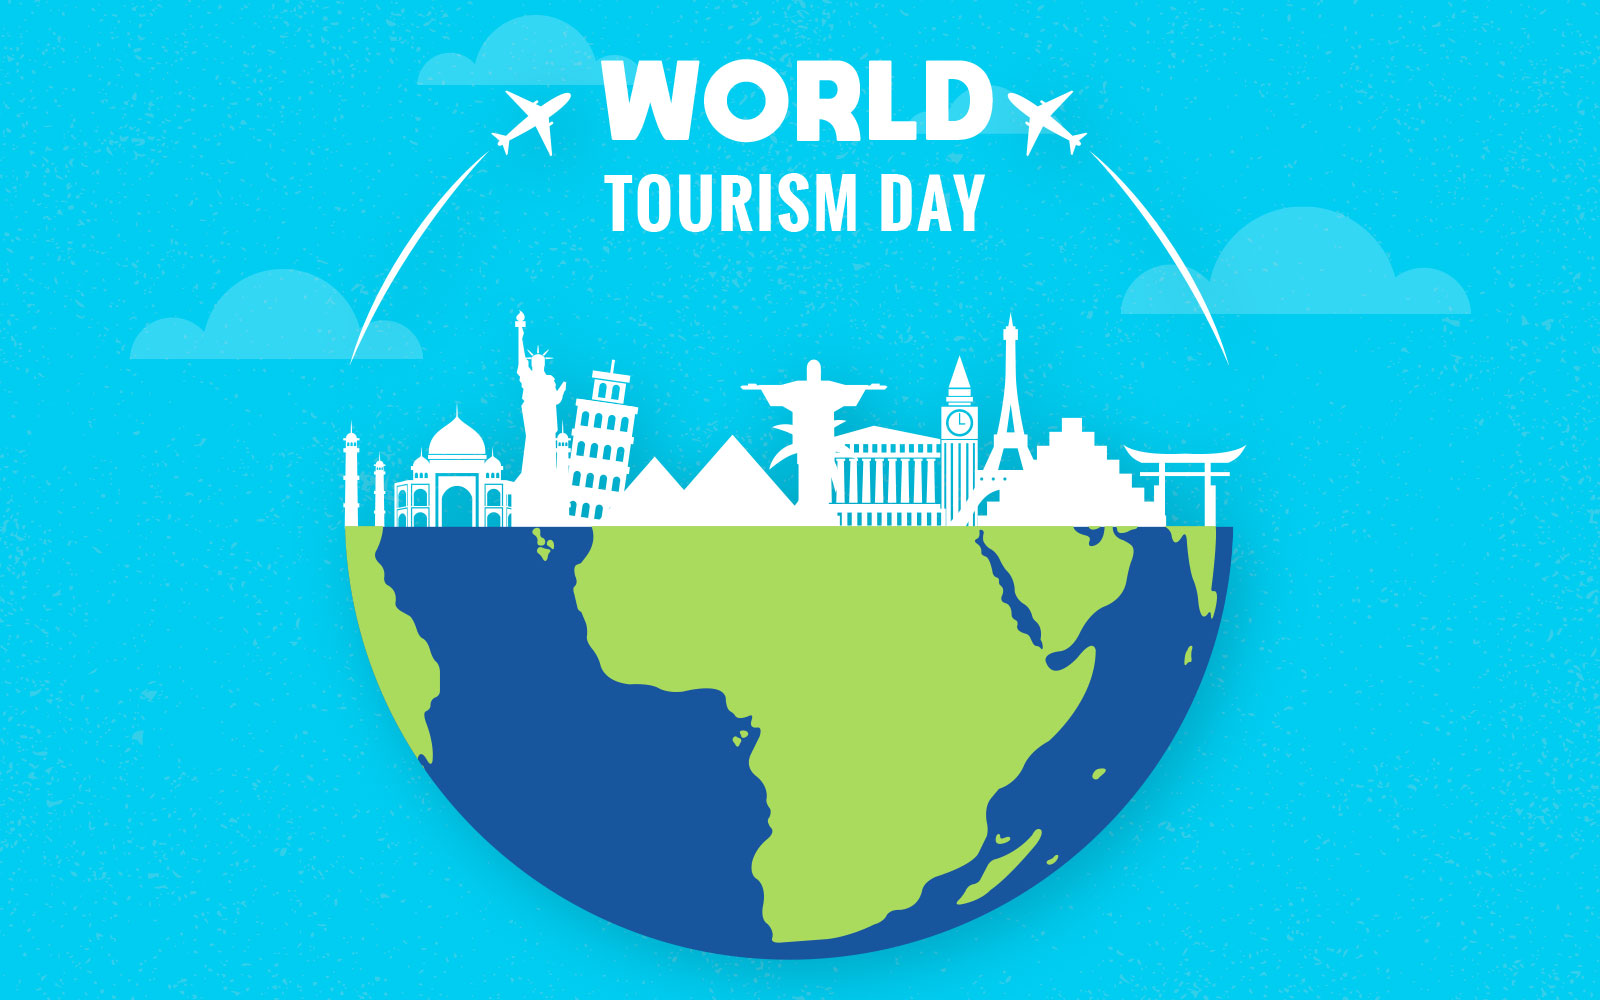 Tourism Day Background - Illustration